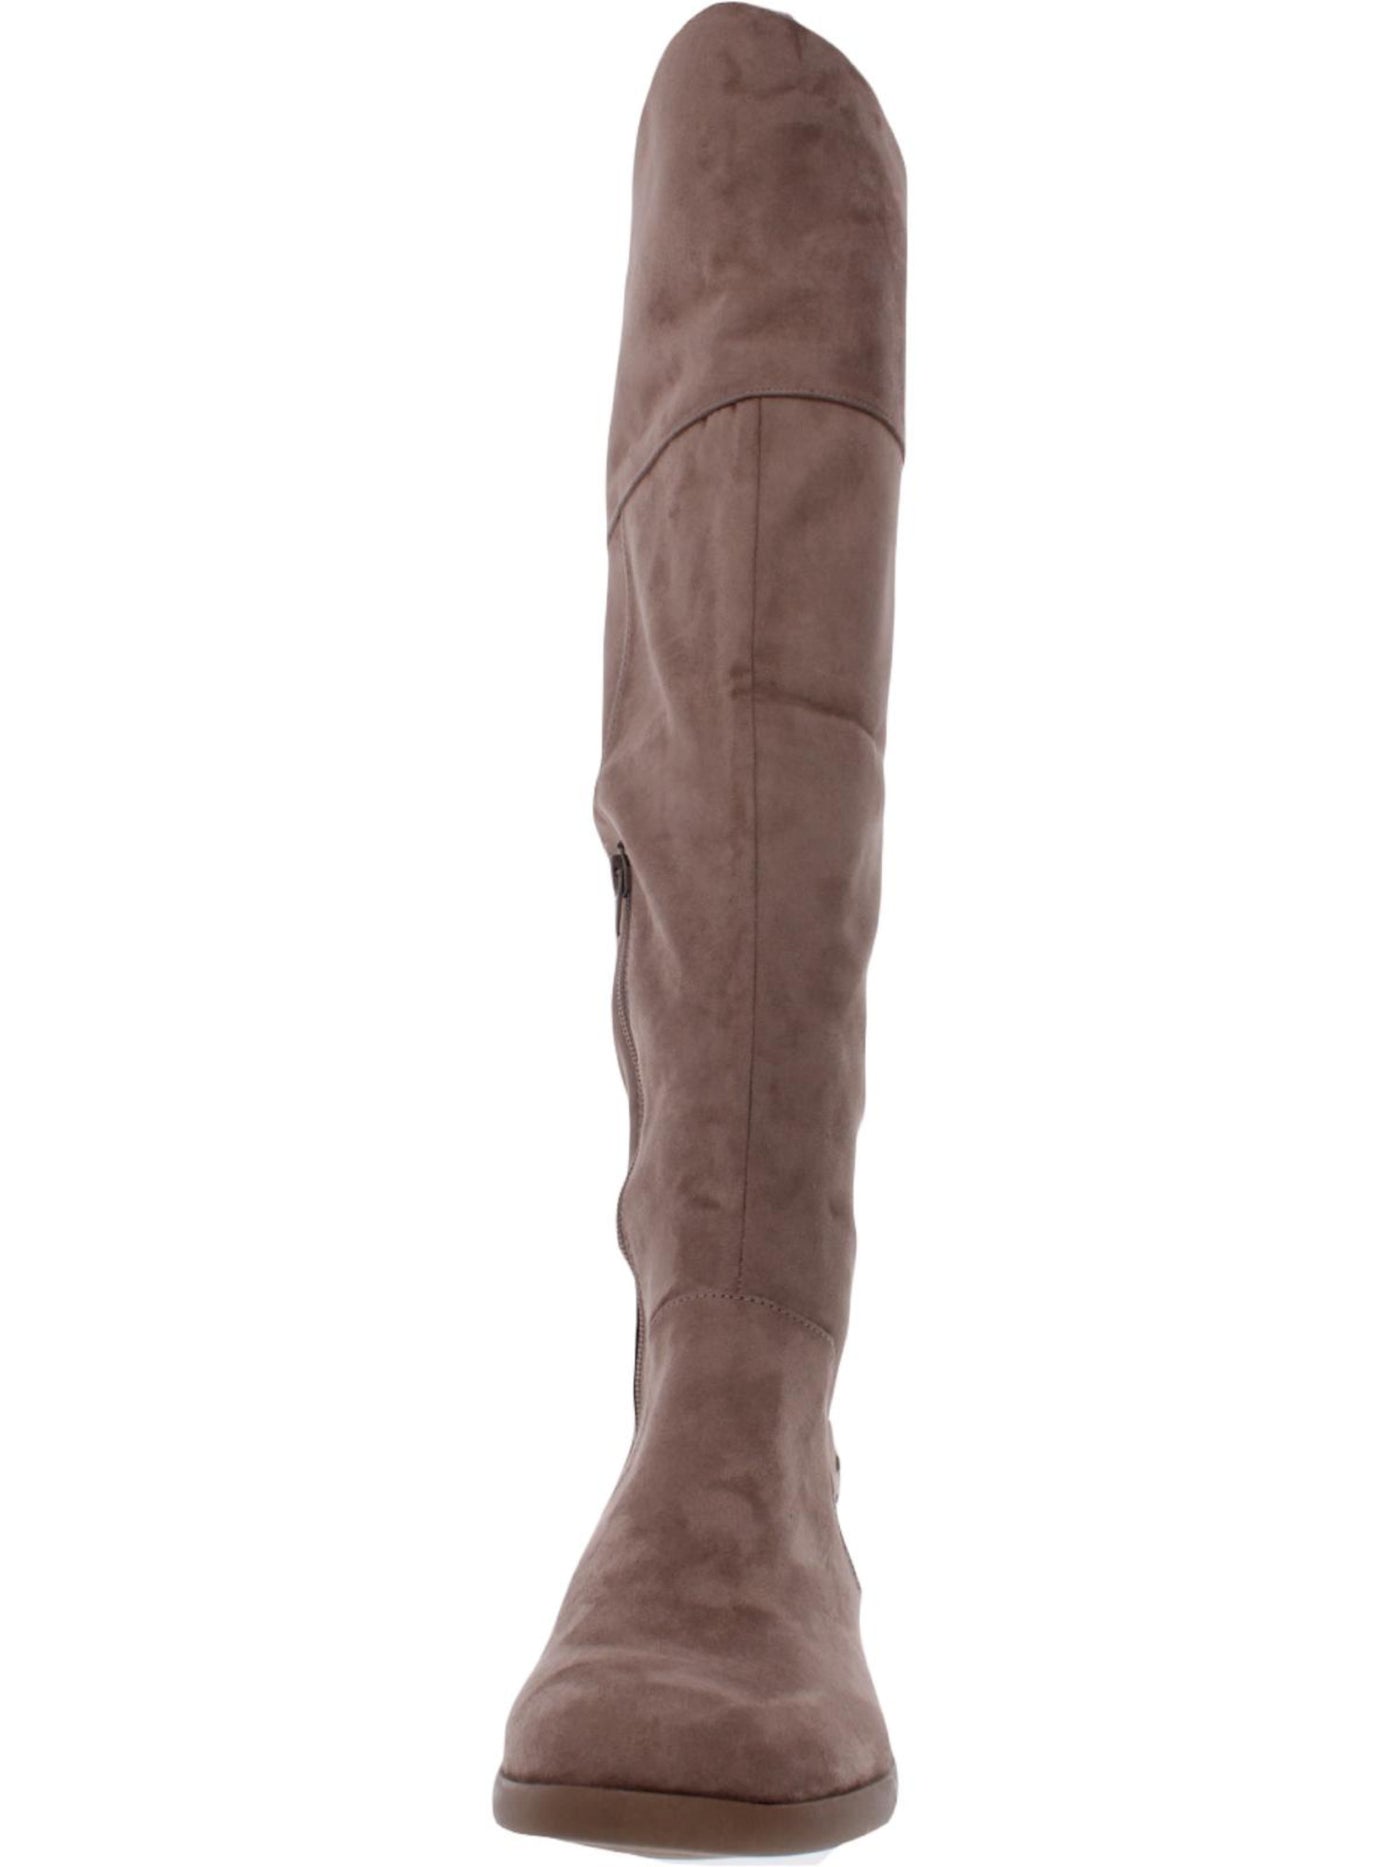 STYLE & COMPANY Womens Beige Zipper Slip Resistant Lessah Round Toe Dress Boots Shoes 6.5 M